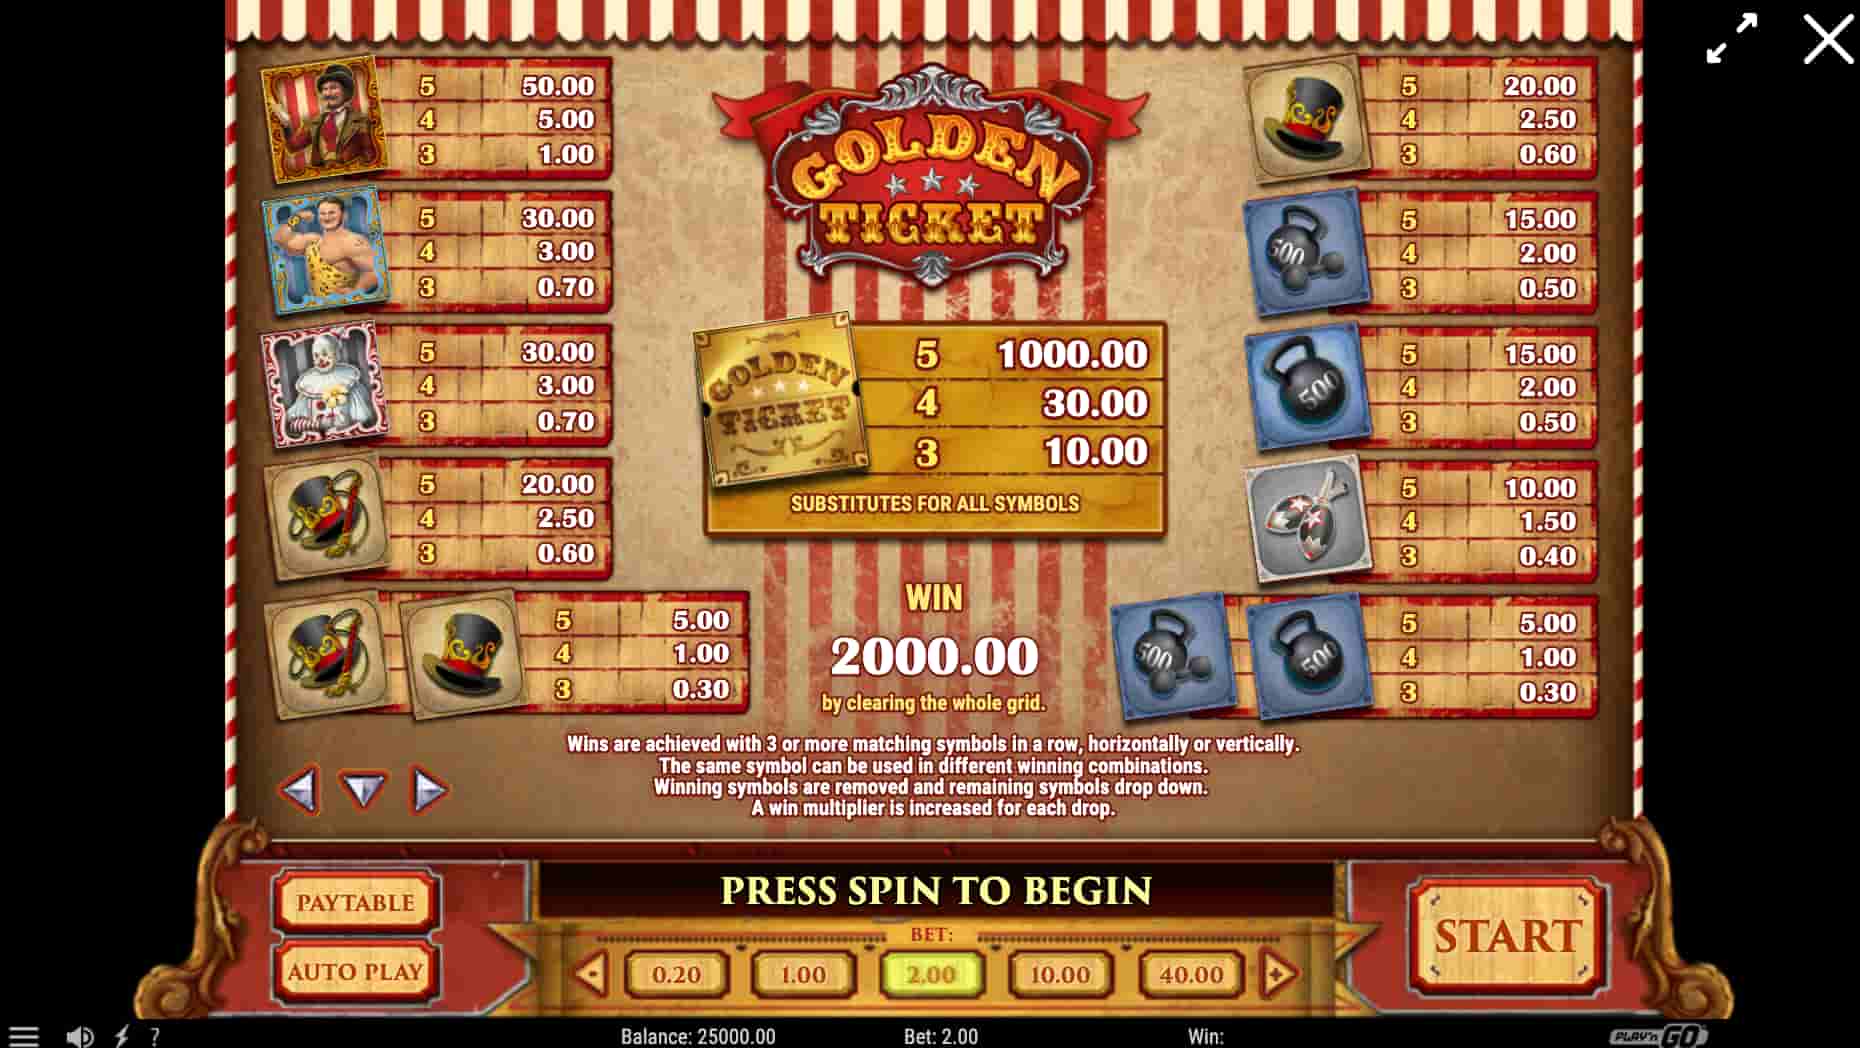 Golden Ticket payout table screenshot